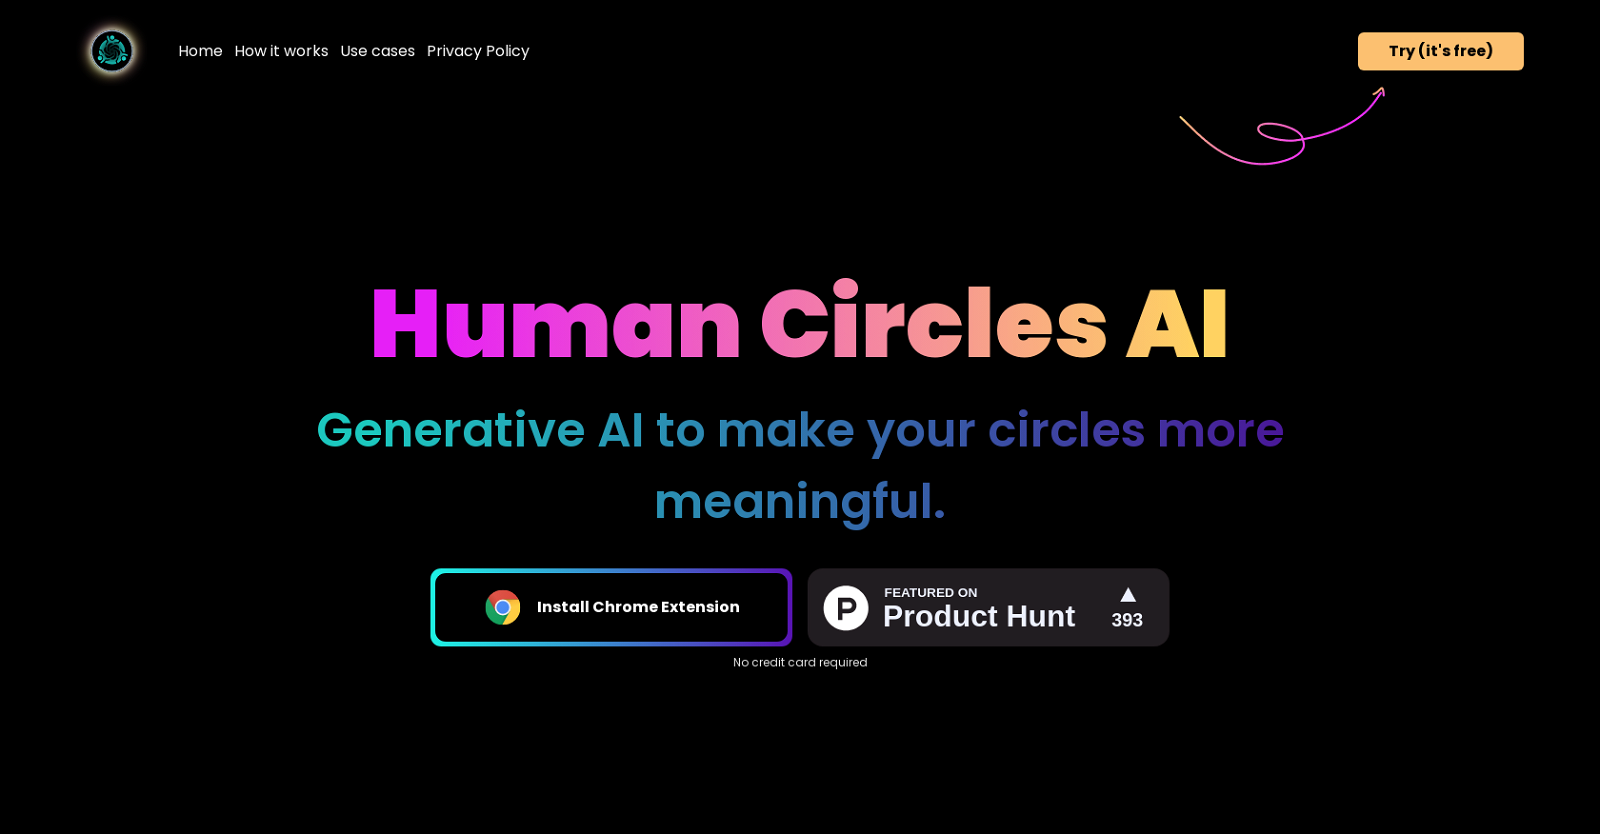 Humancircles website